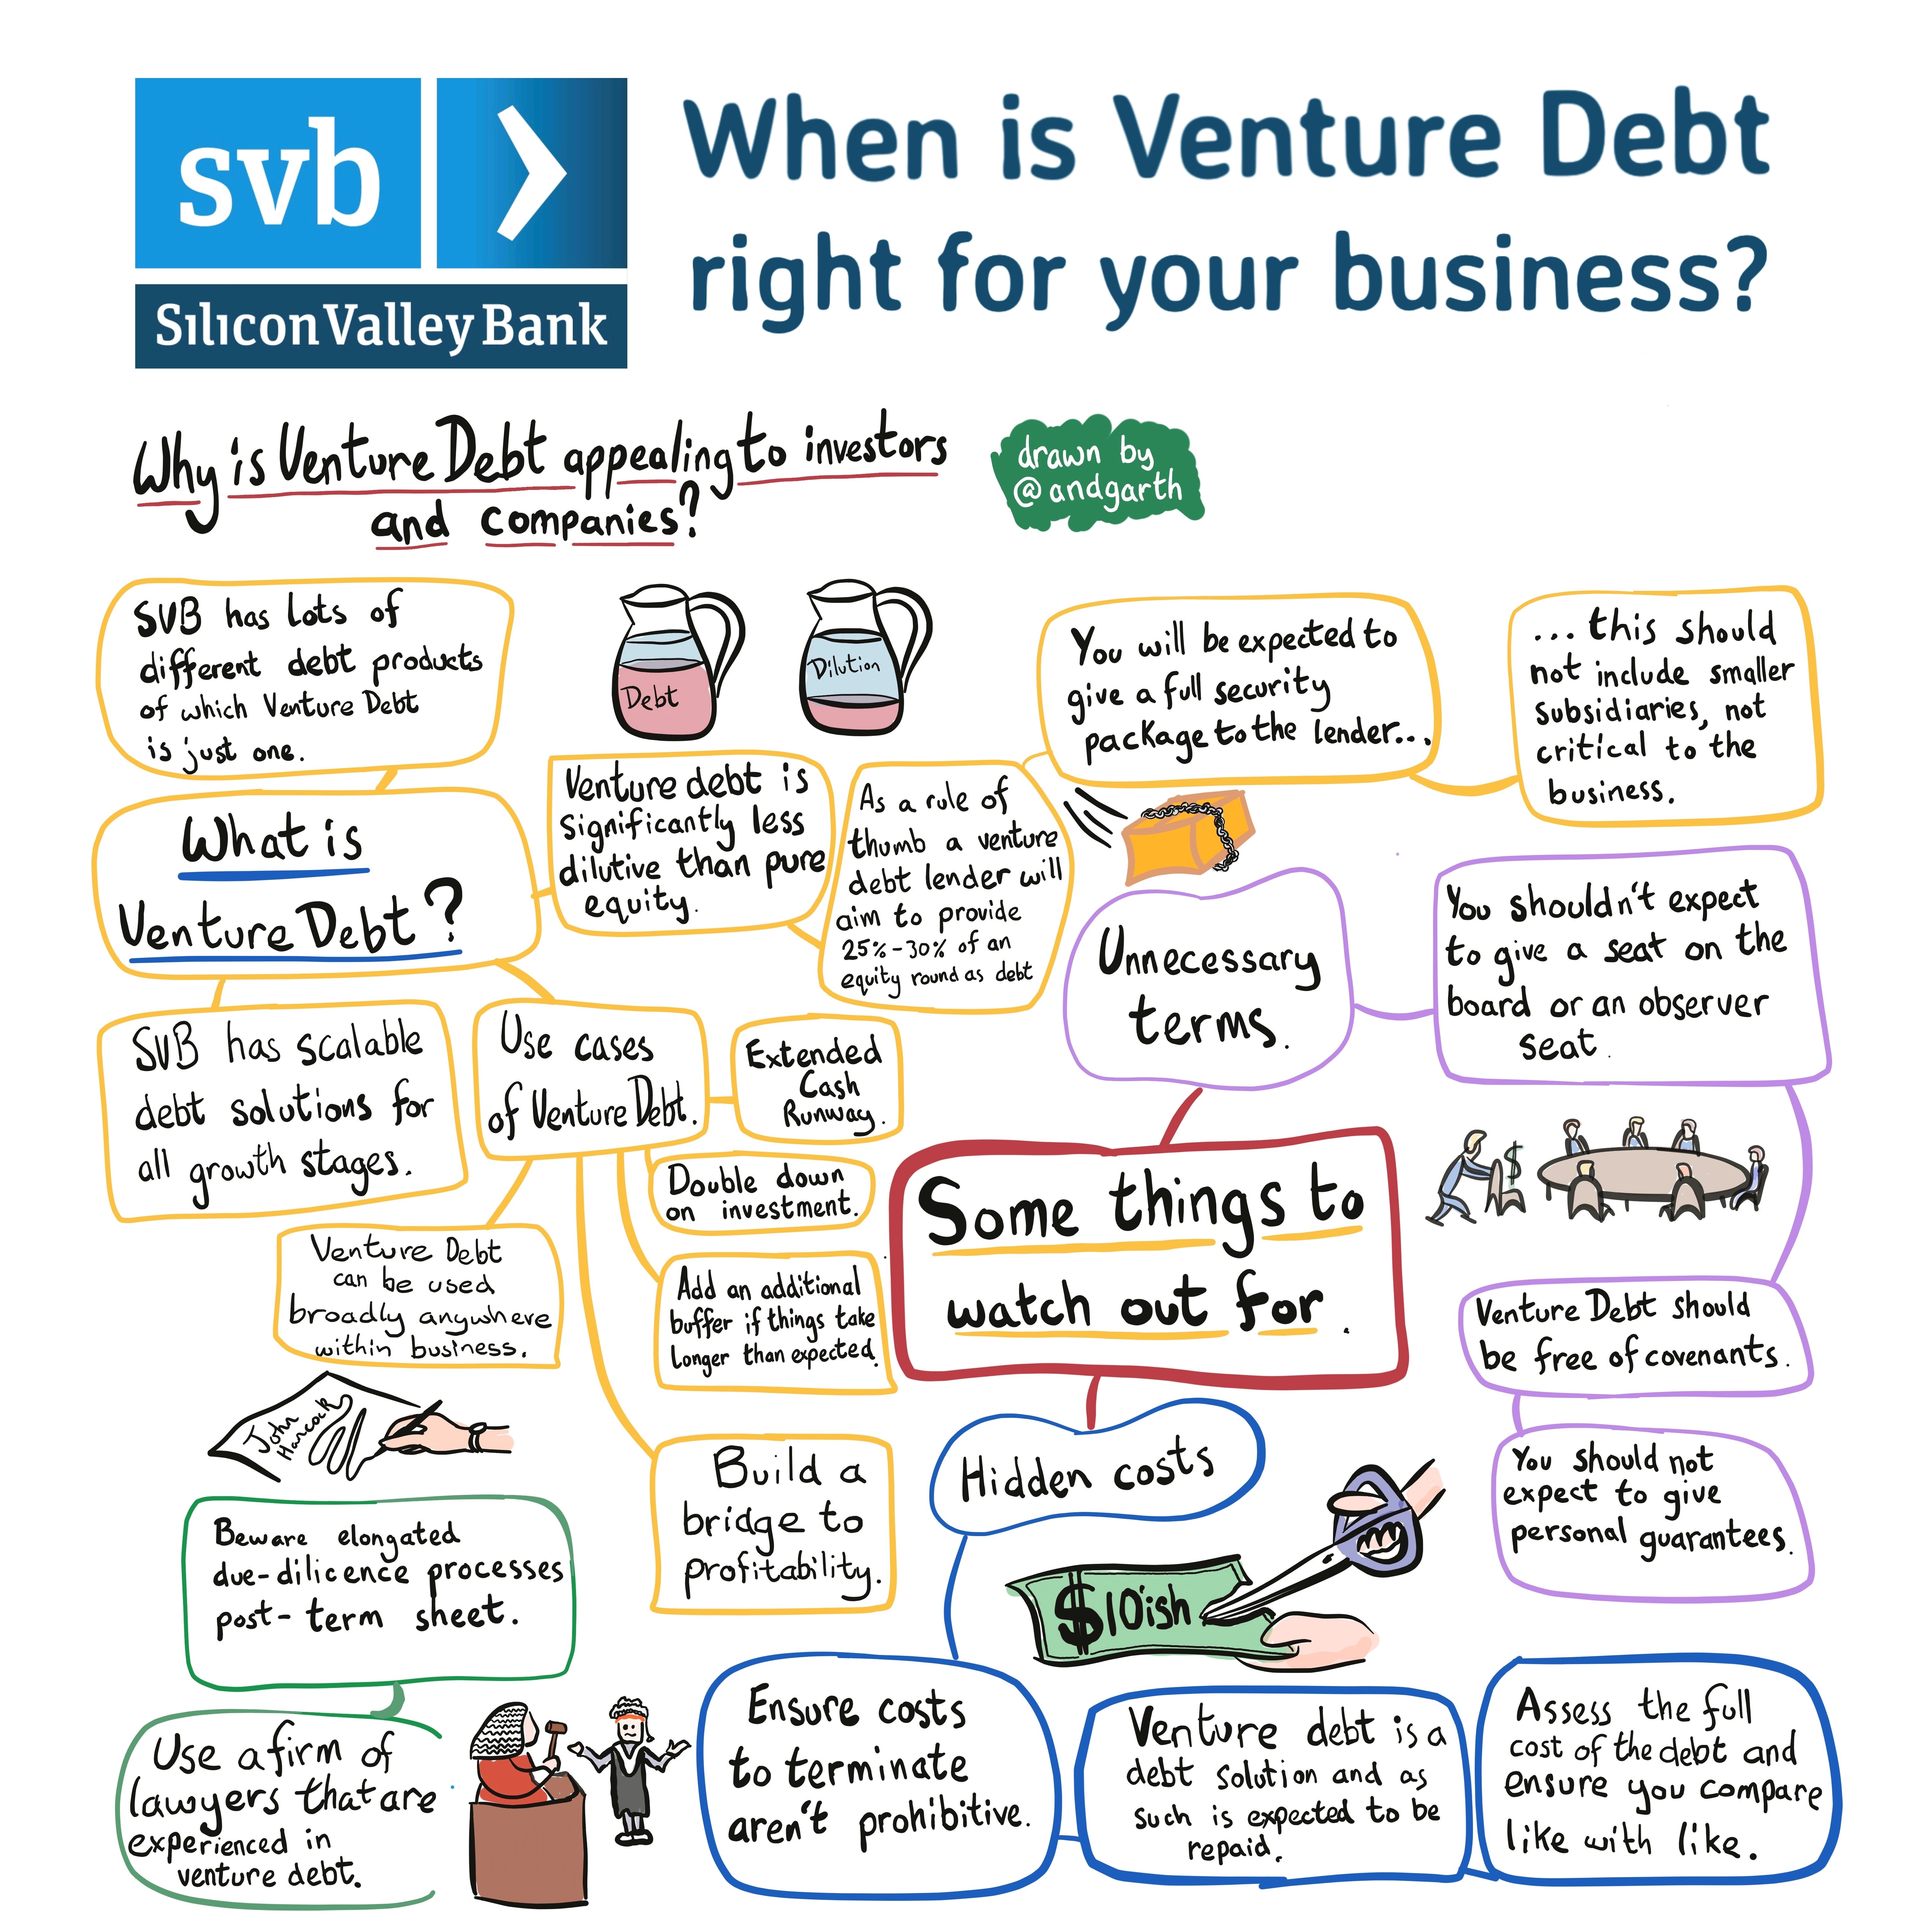 When should a startup consider venture debt?